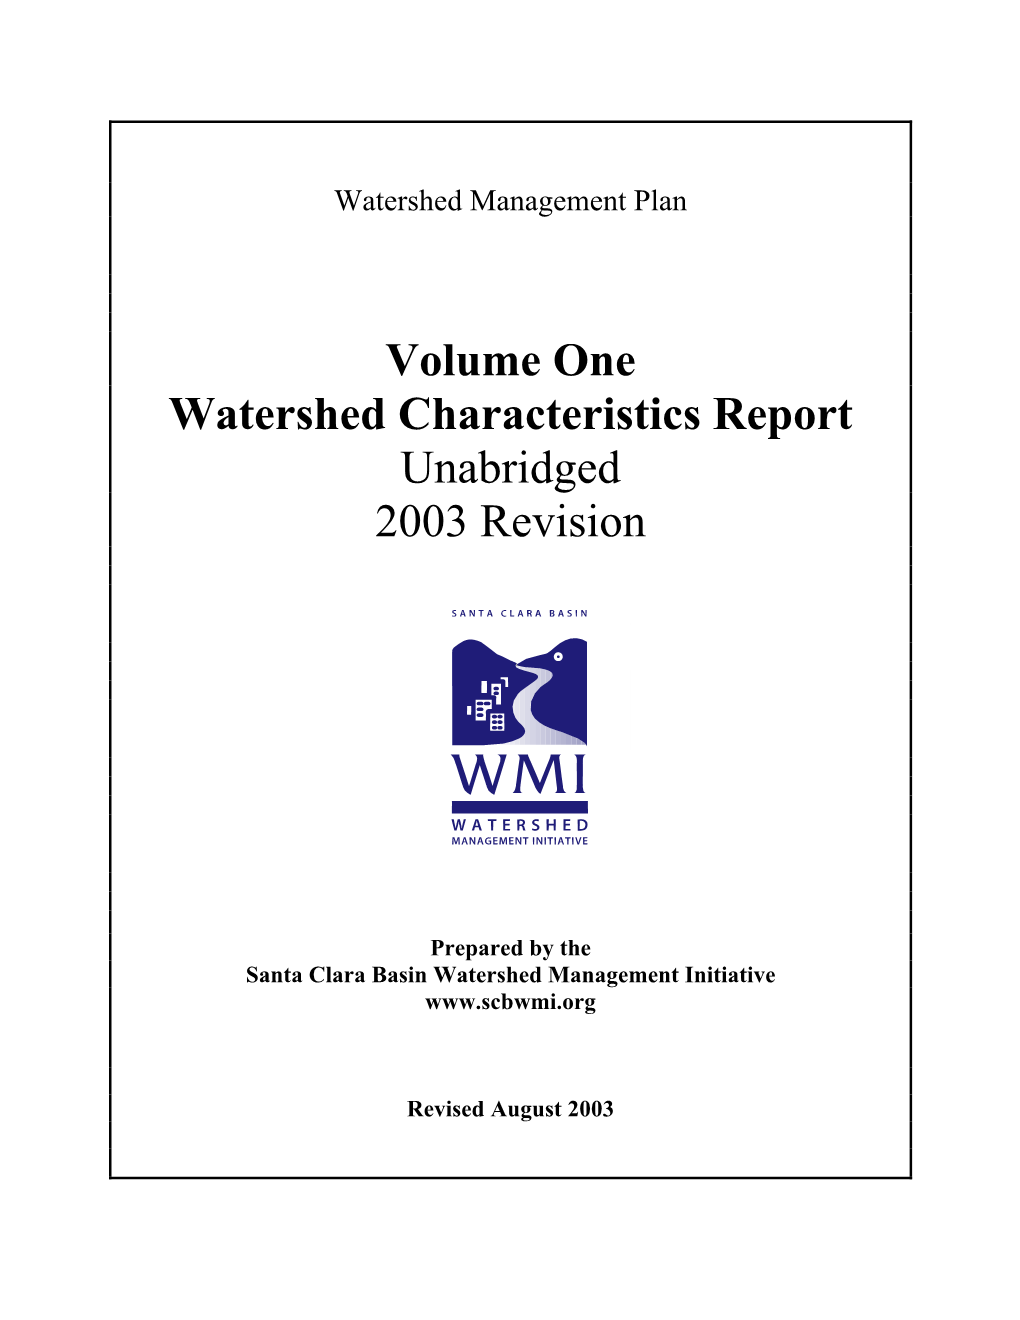 Volume One Watershed Characteristics Report Unabridged